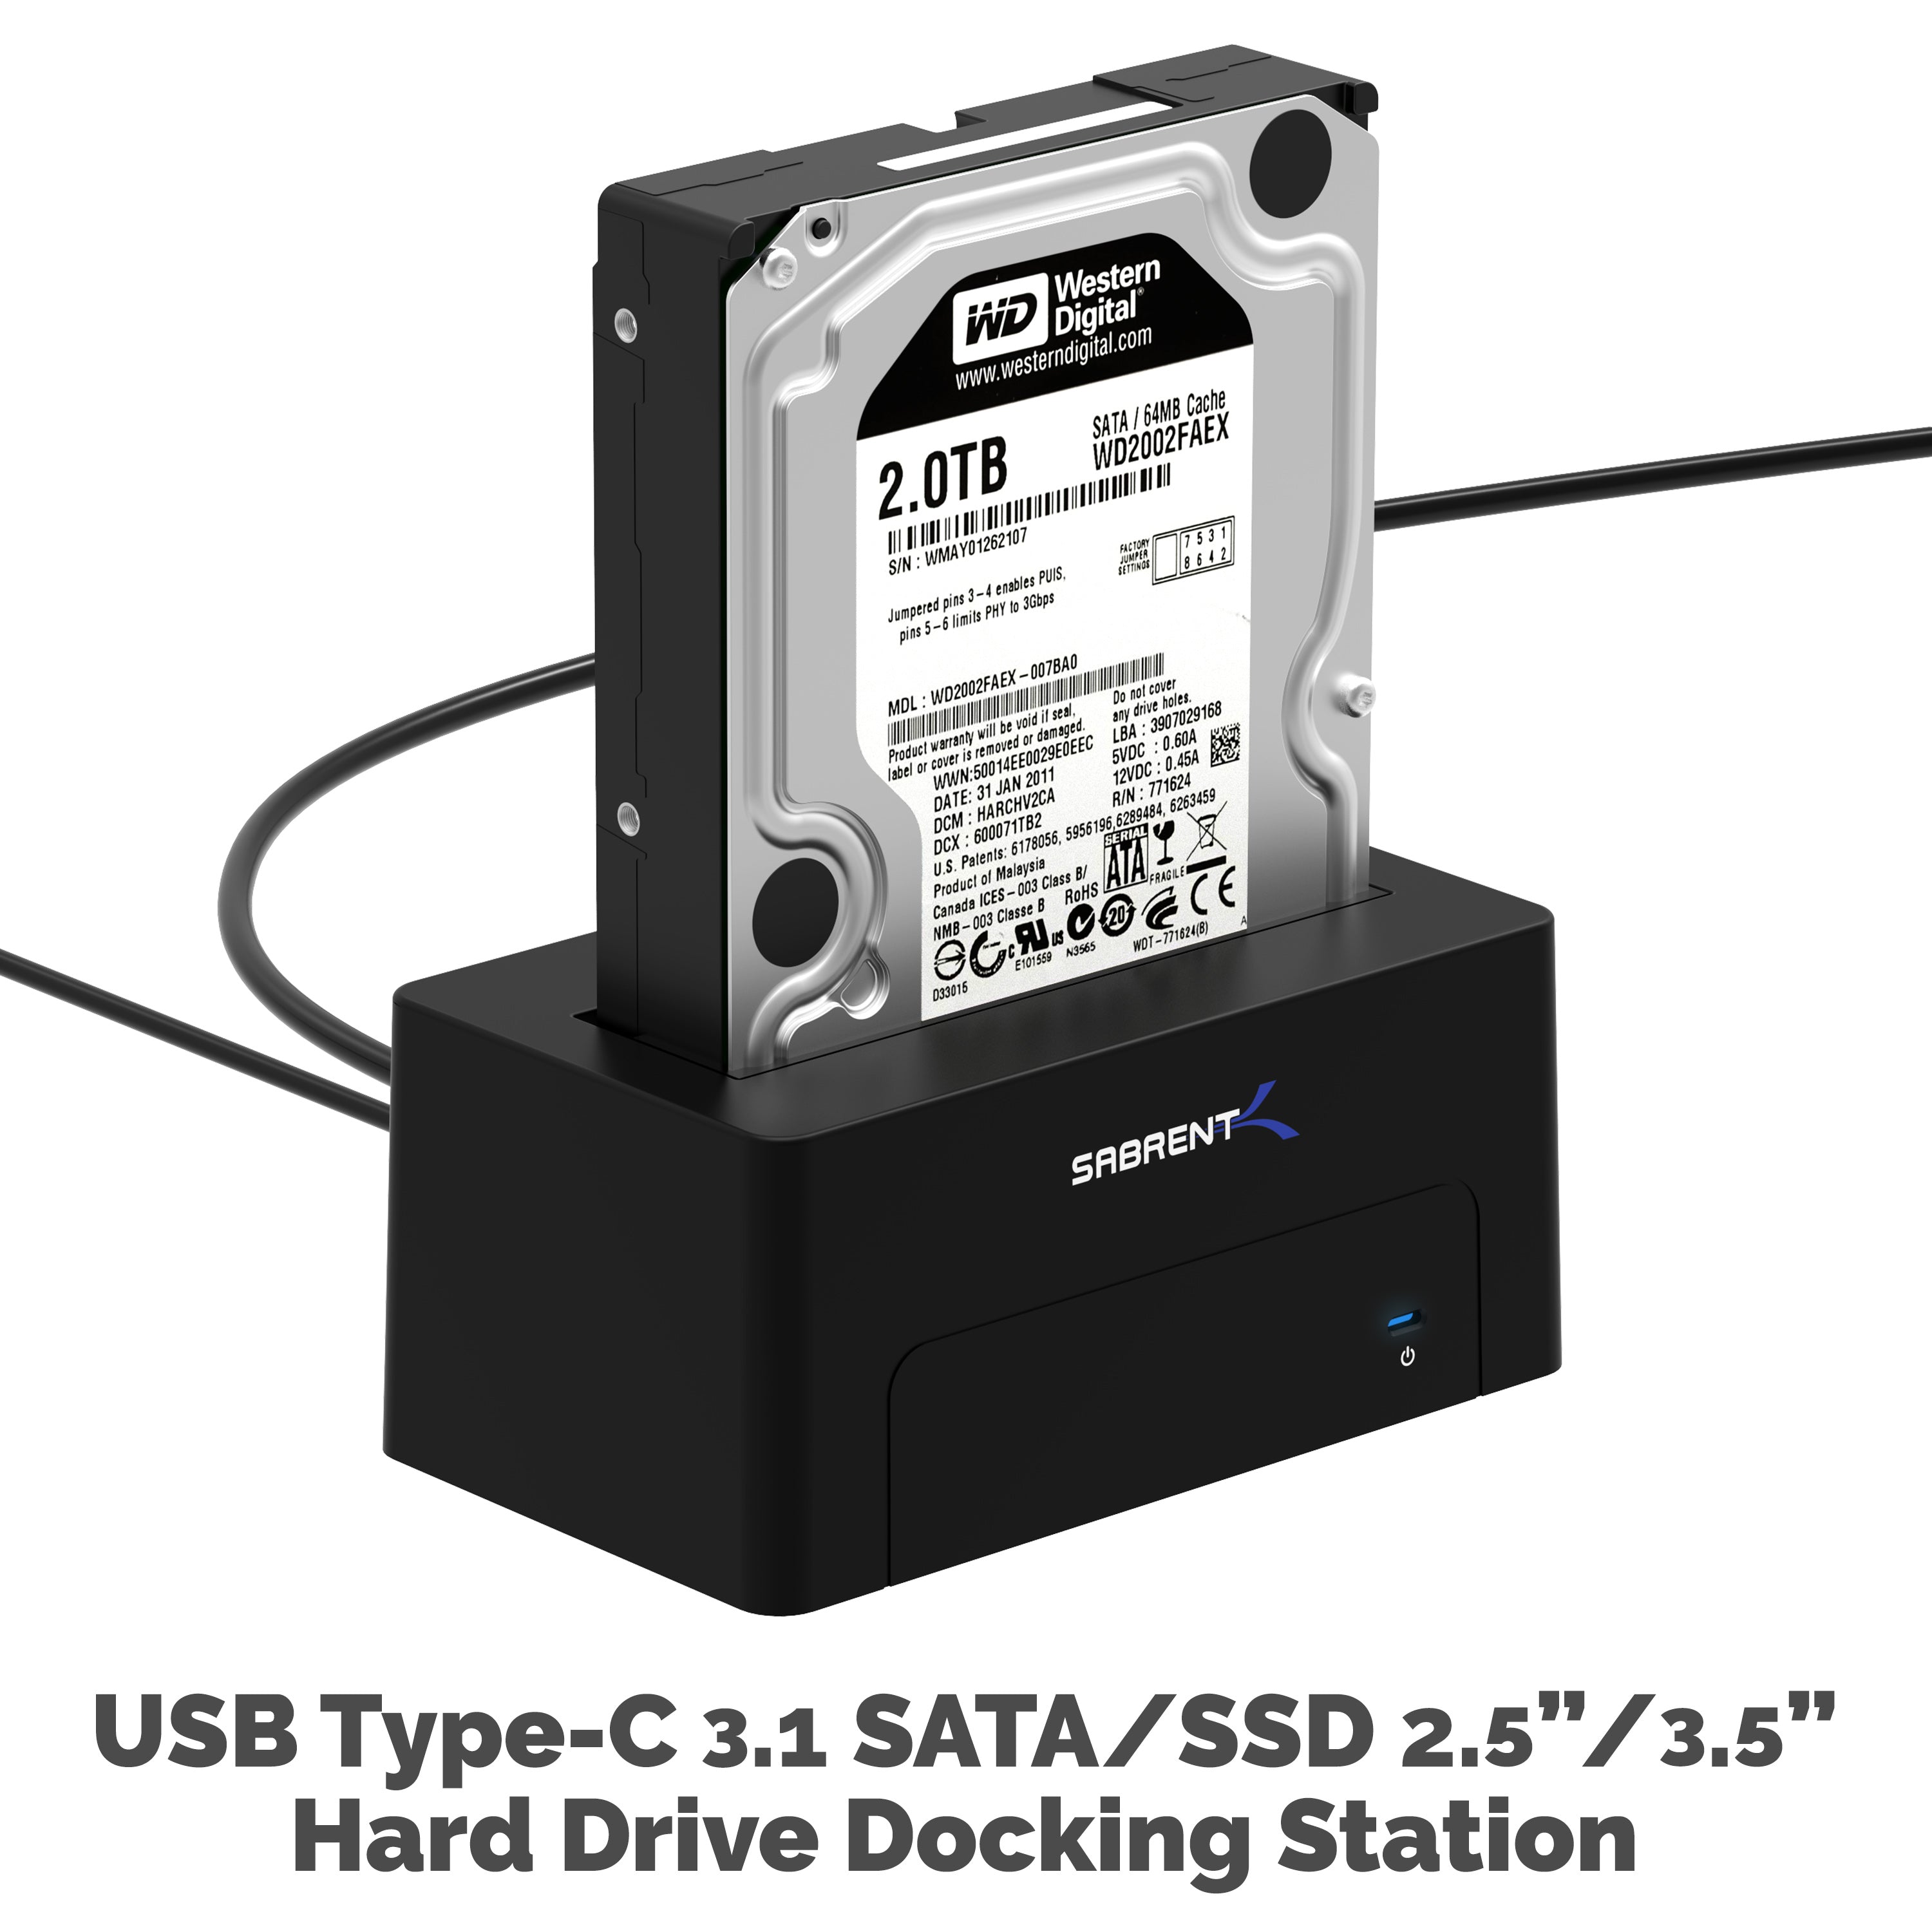 jorden krysantemum mikro USB 3.1 Type-C 2.5"-3.5" HDD Docking Station - Sabrent